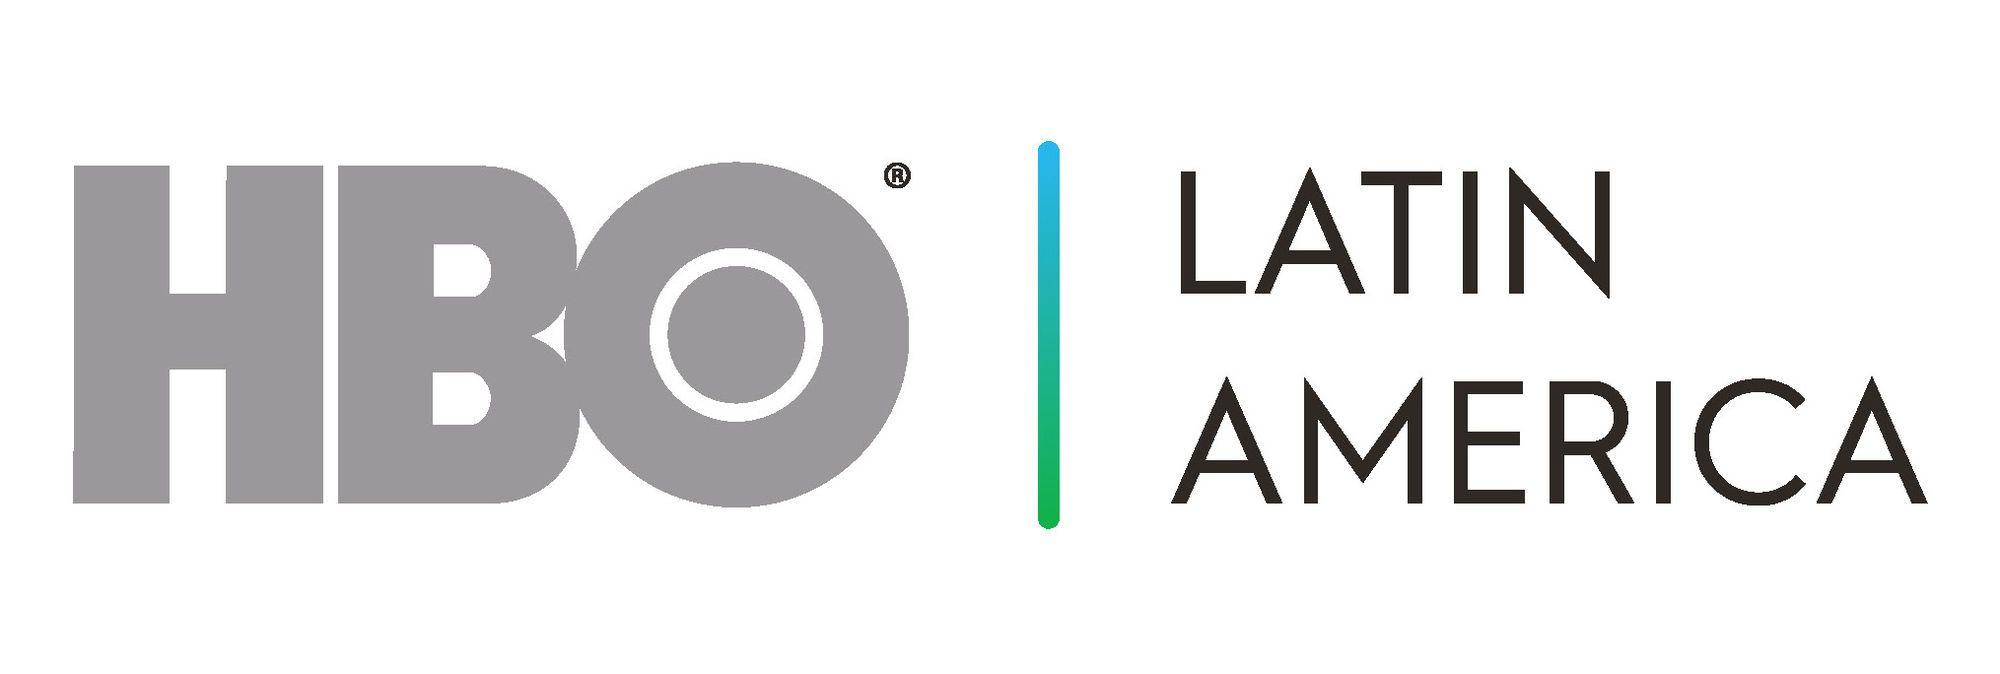 Latin America Logo - HBO Latin America (Networks)